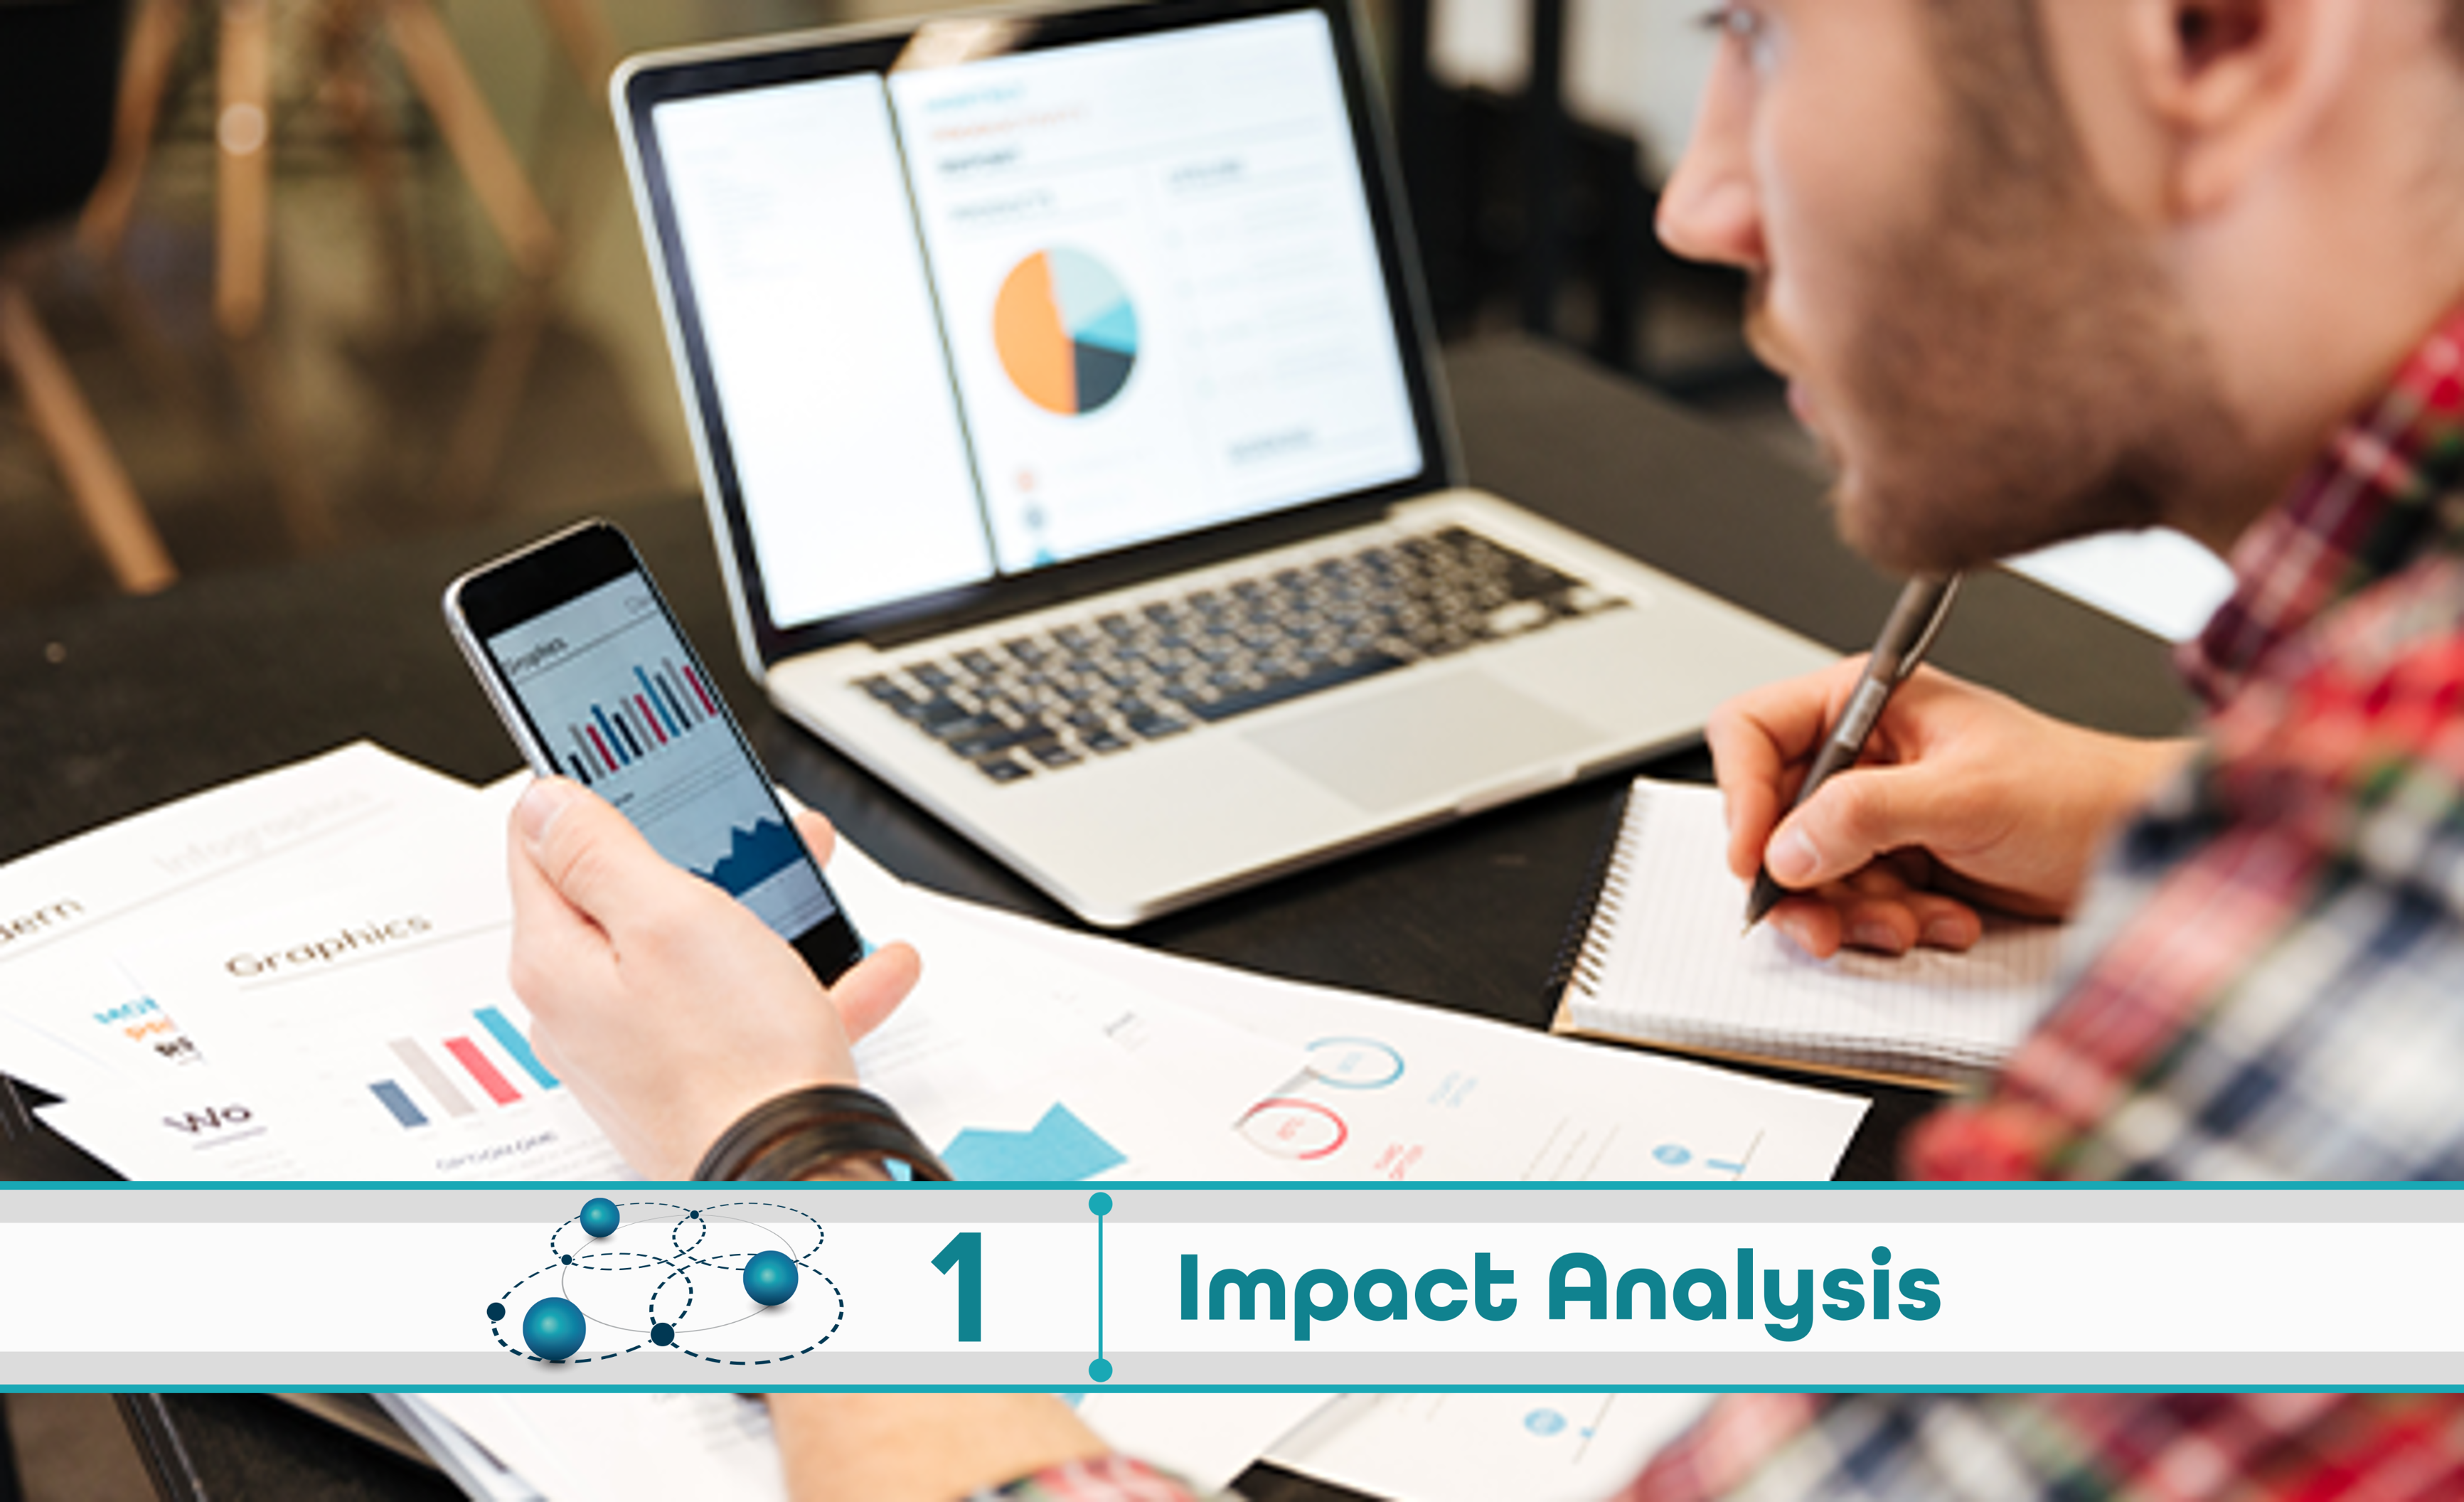 Level 1: Impact Analysis